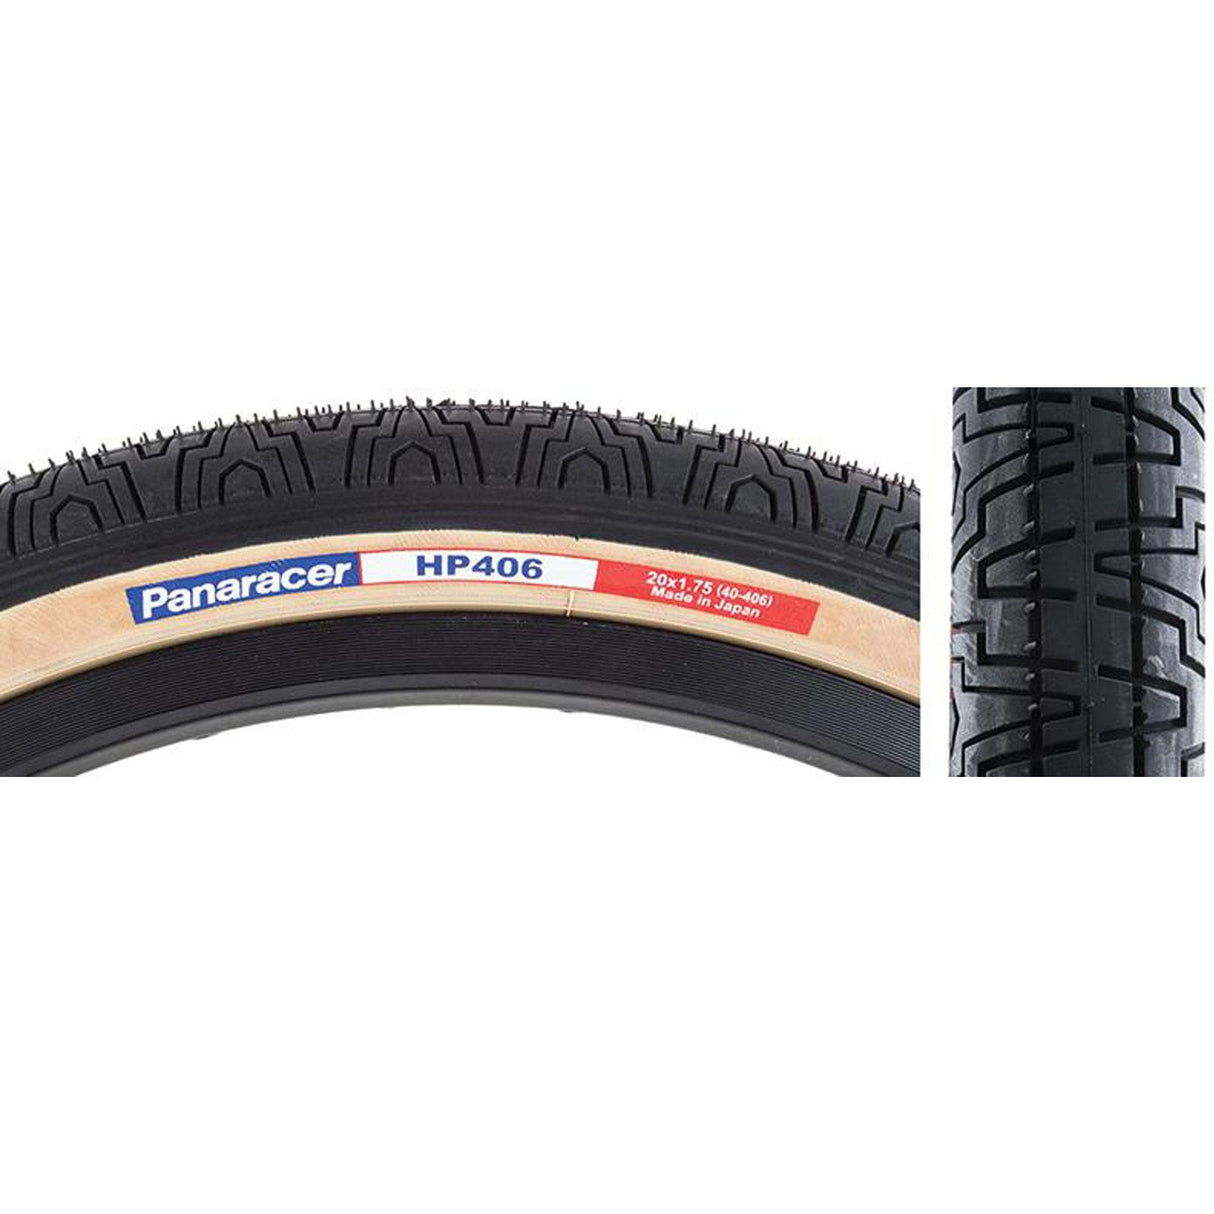 Panaracer Hp406 Bmx Tyre: Black/Amber 20X1.75"